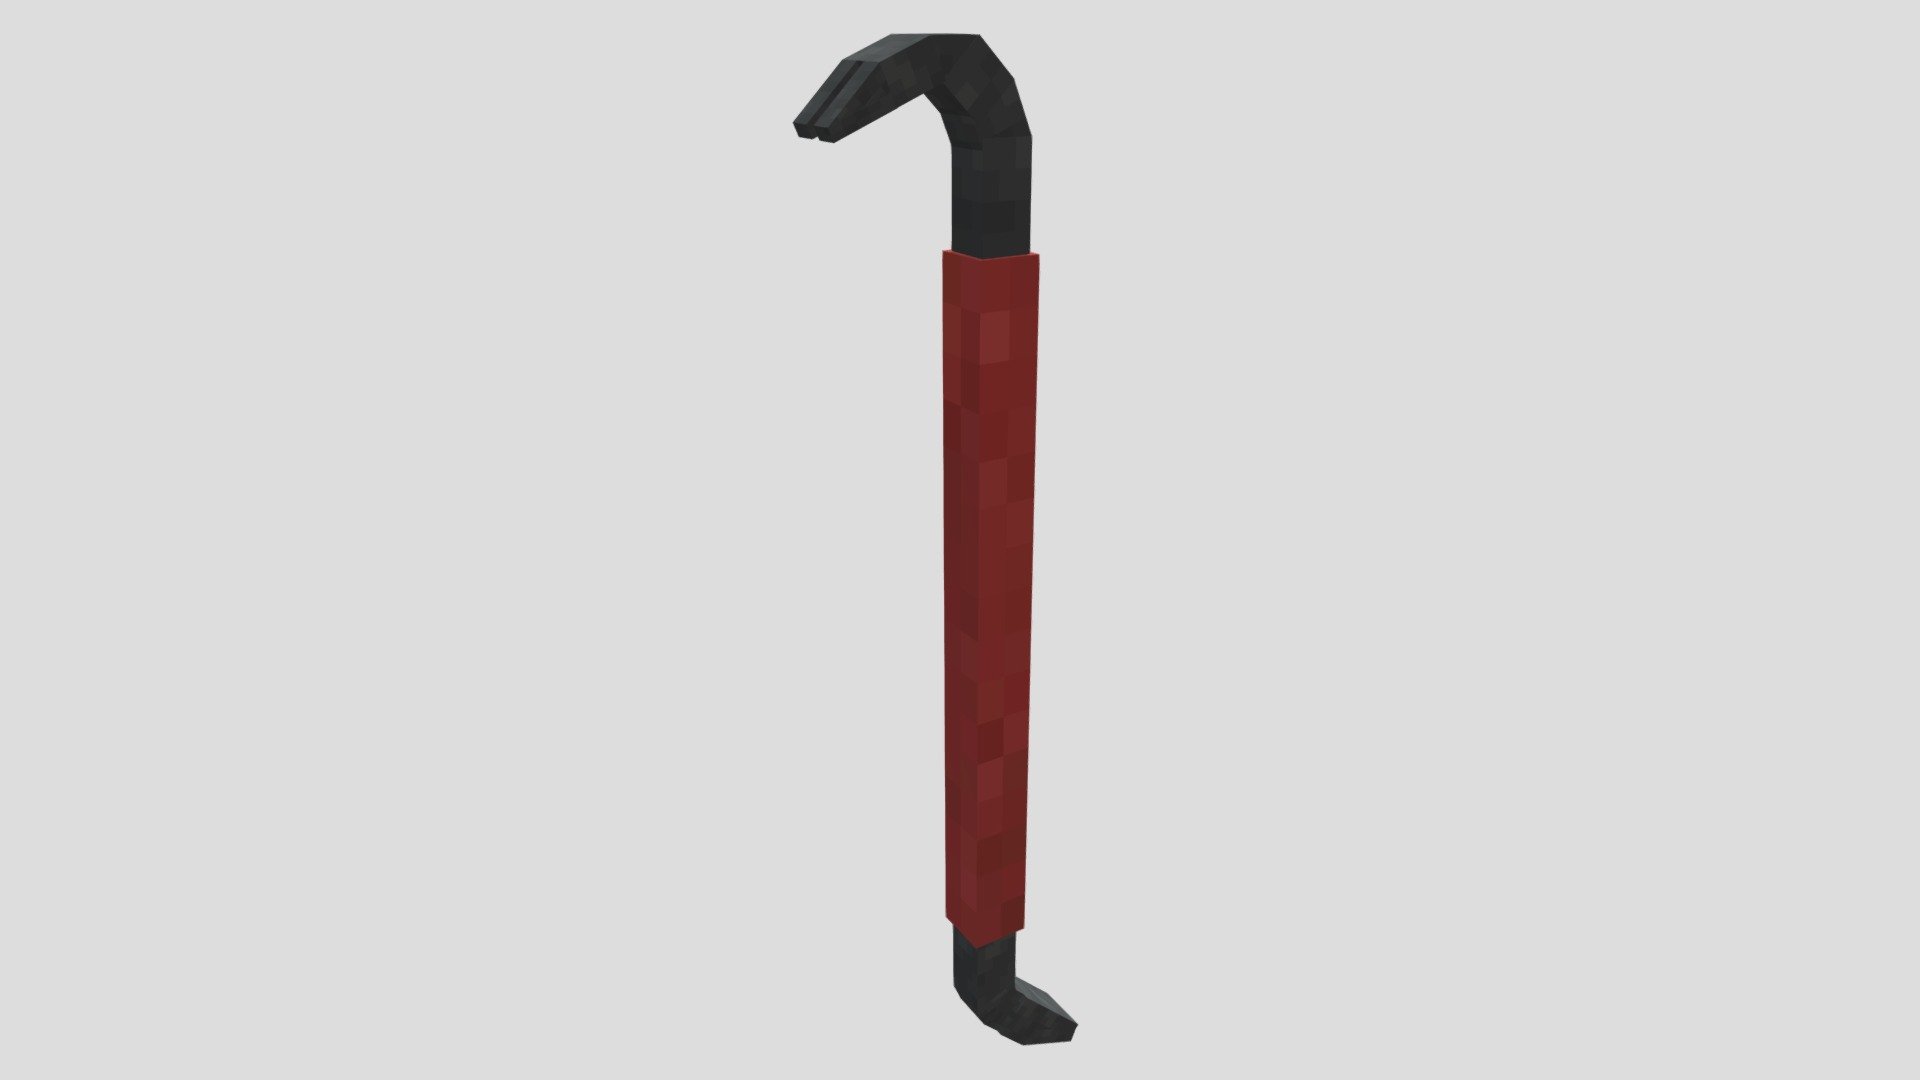 MattB1023's Crowbar for Sword Skin addon - Minecraft - Mod DB